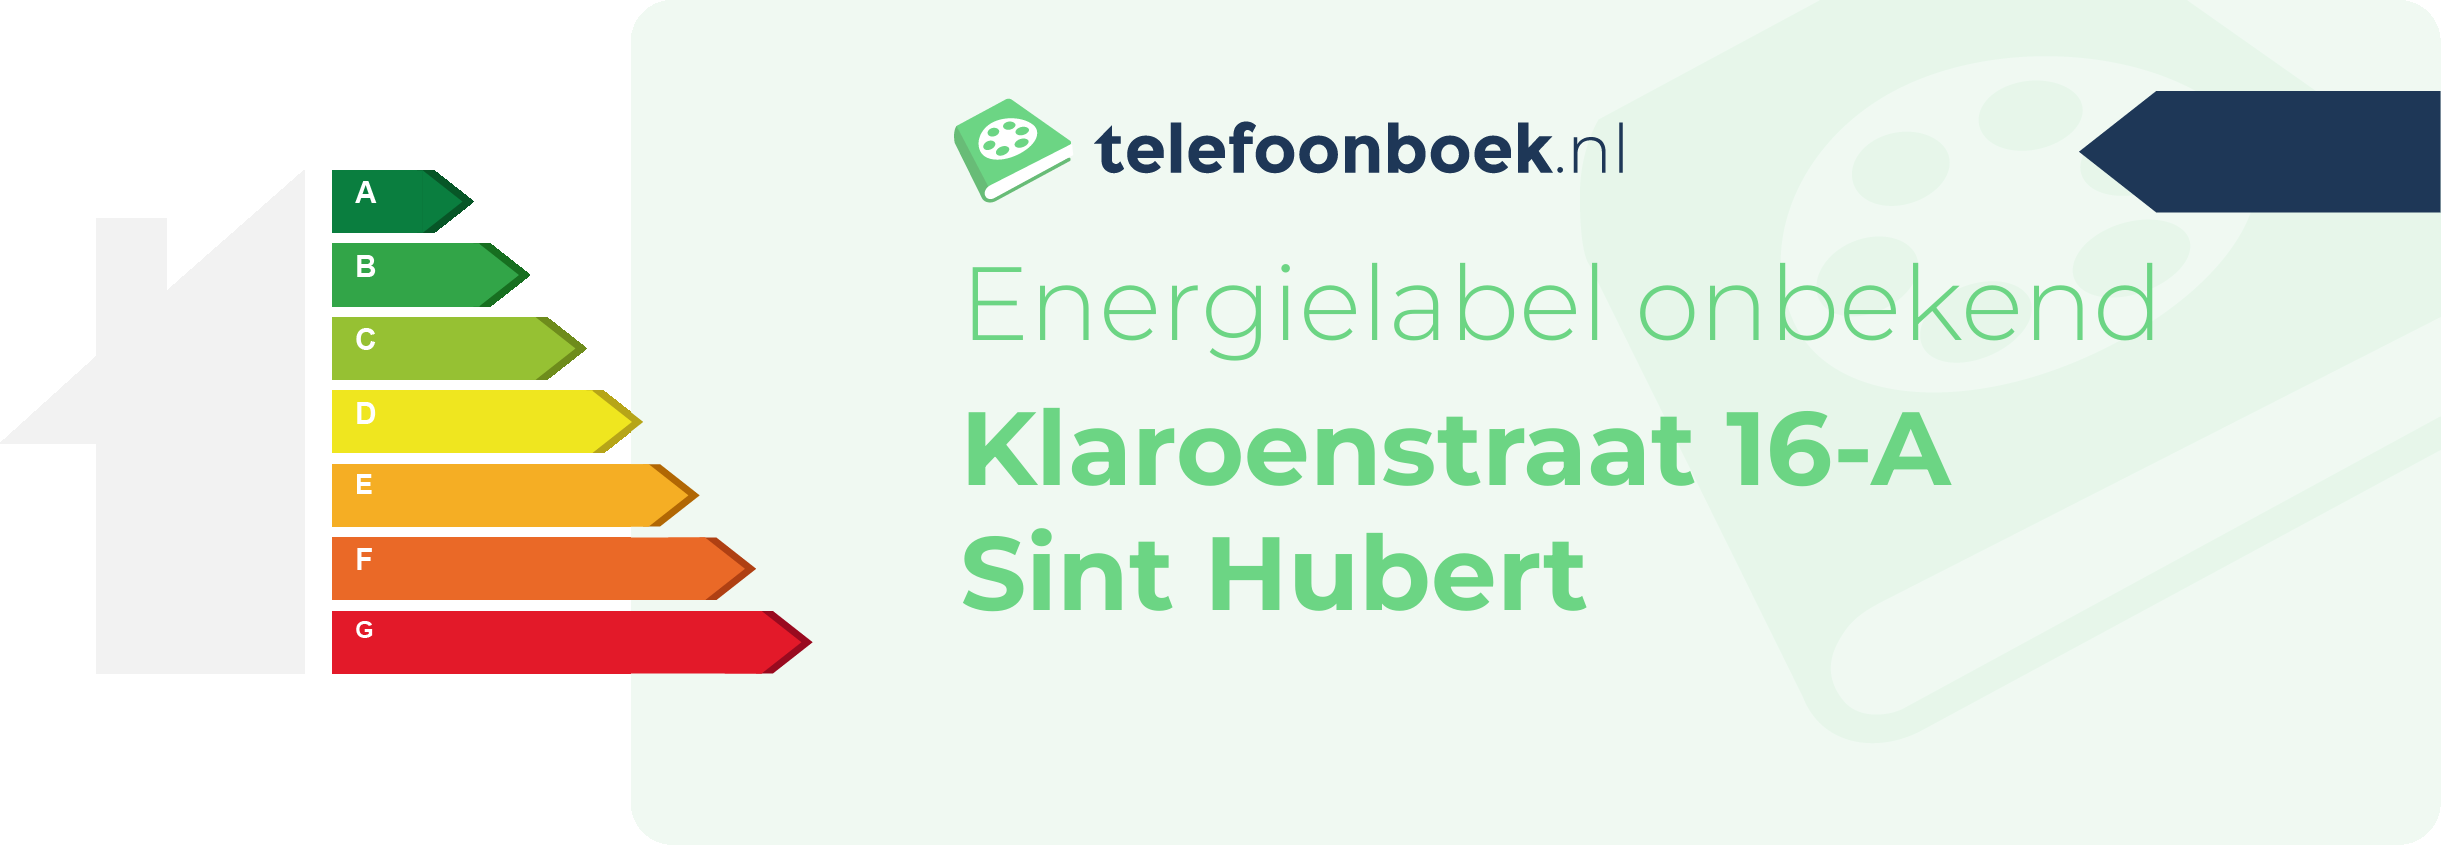 Energielabel Klaroenstraat 16-A Sint Hubert